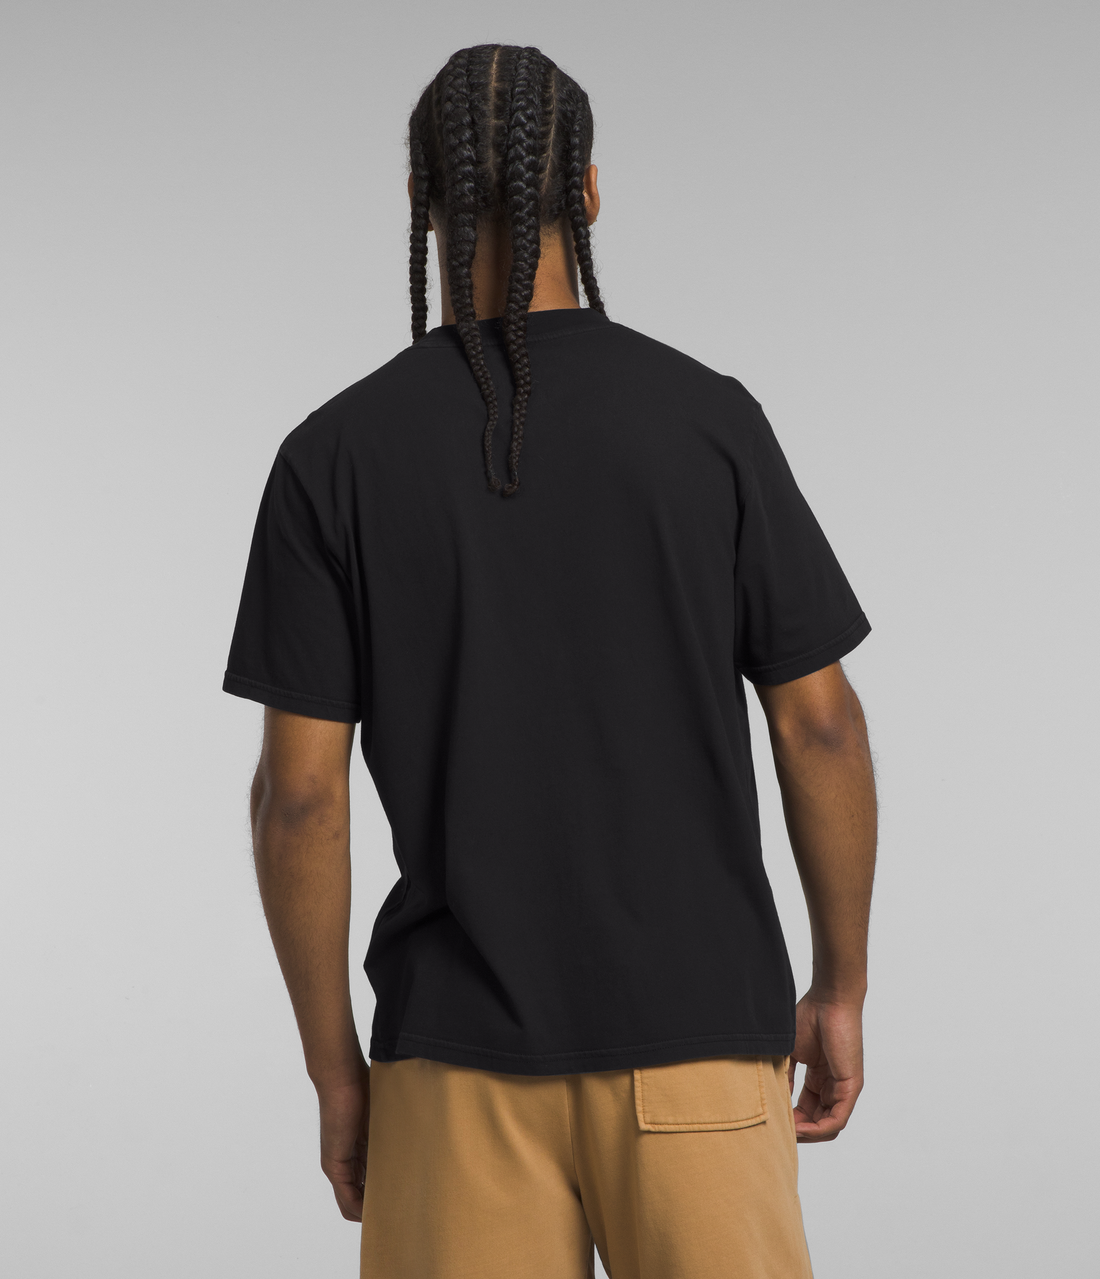 The North Face Garment Dye T-Shirt - Black - MODA3